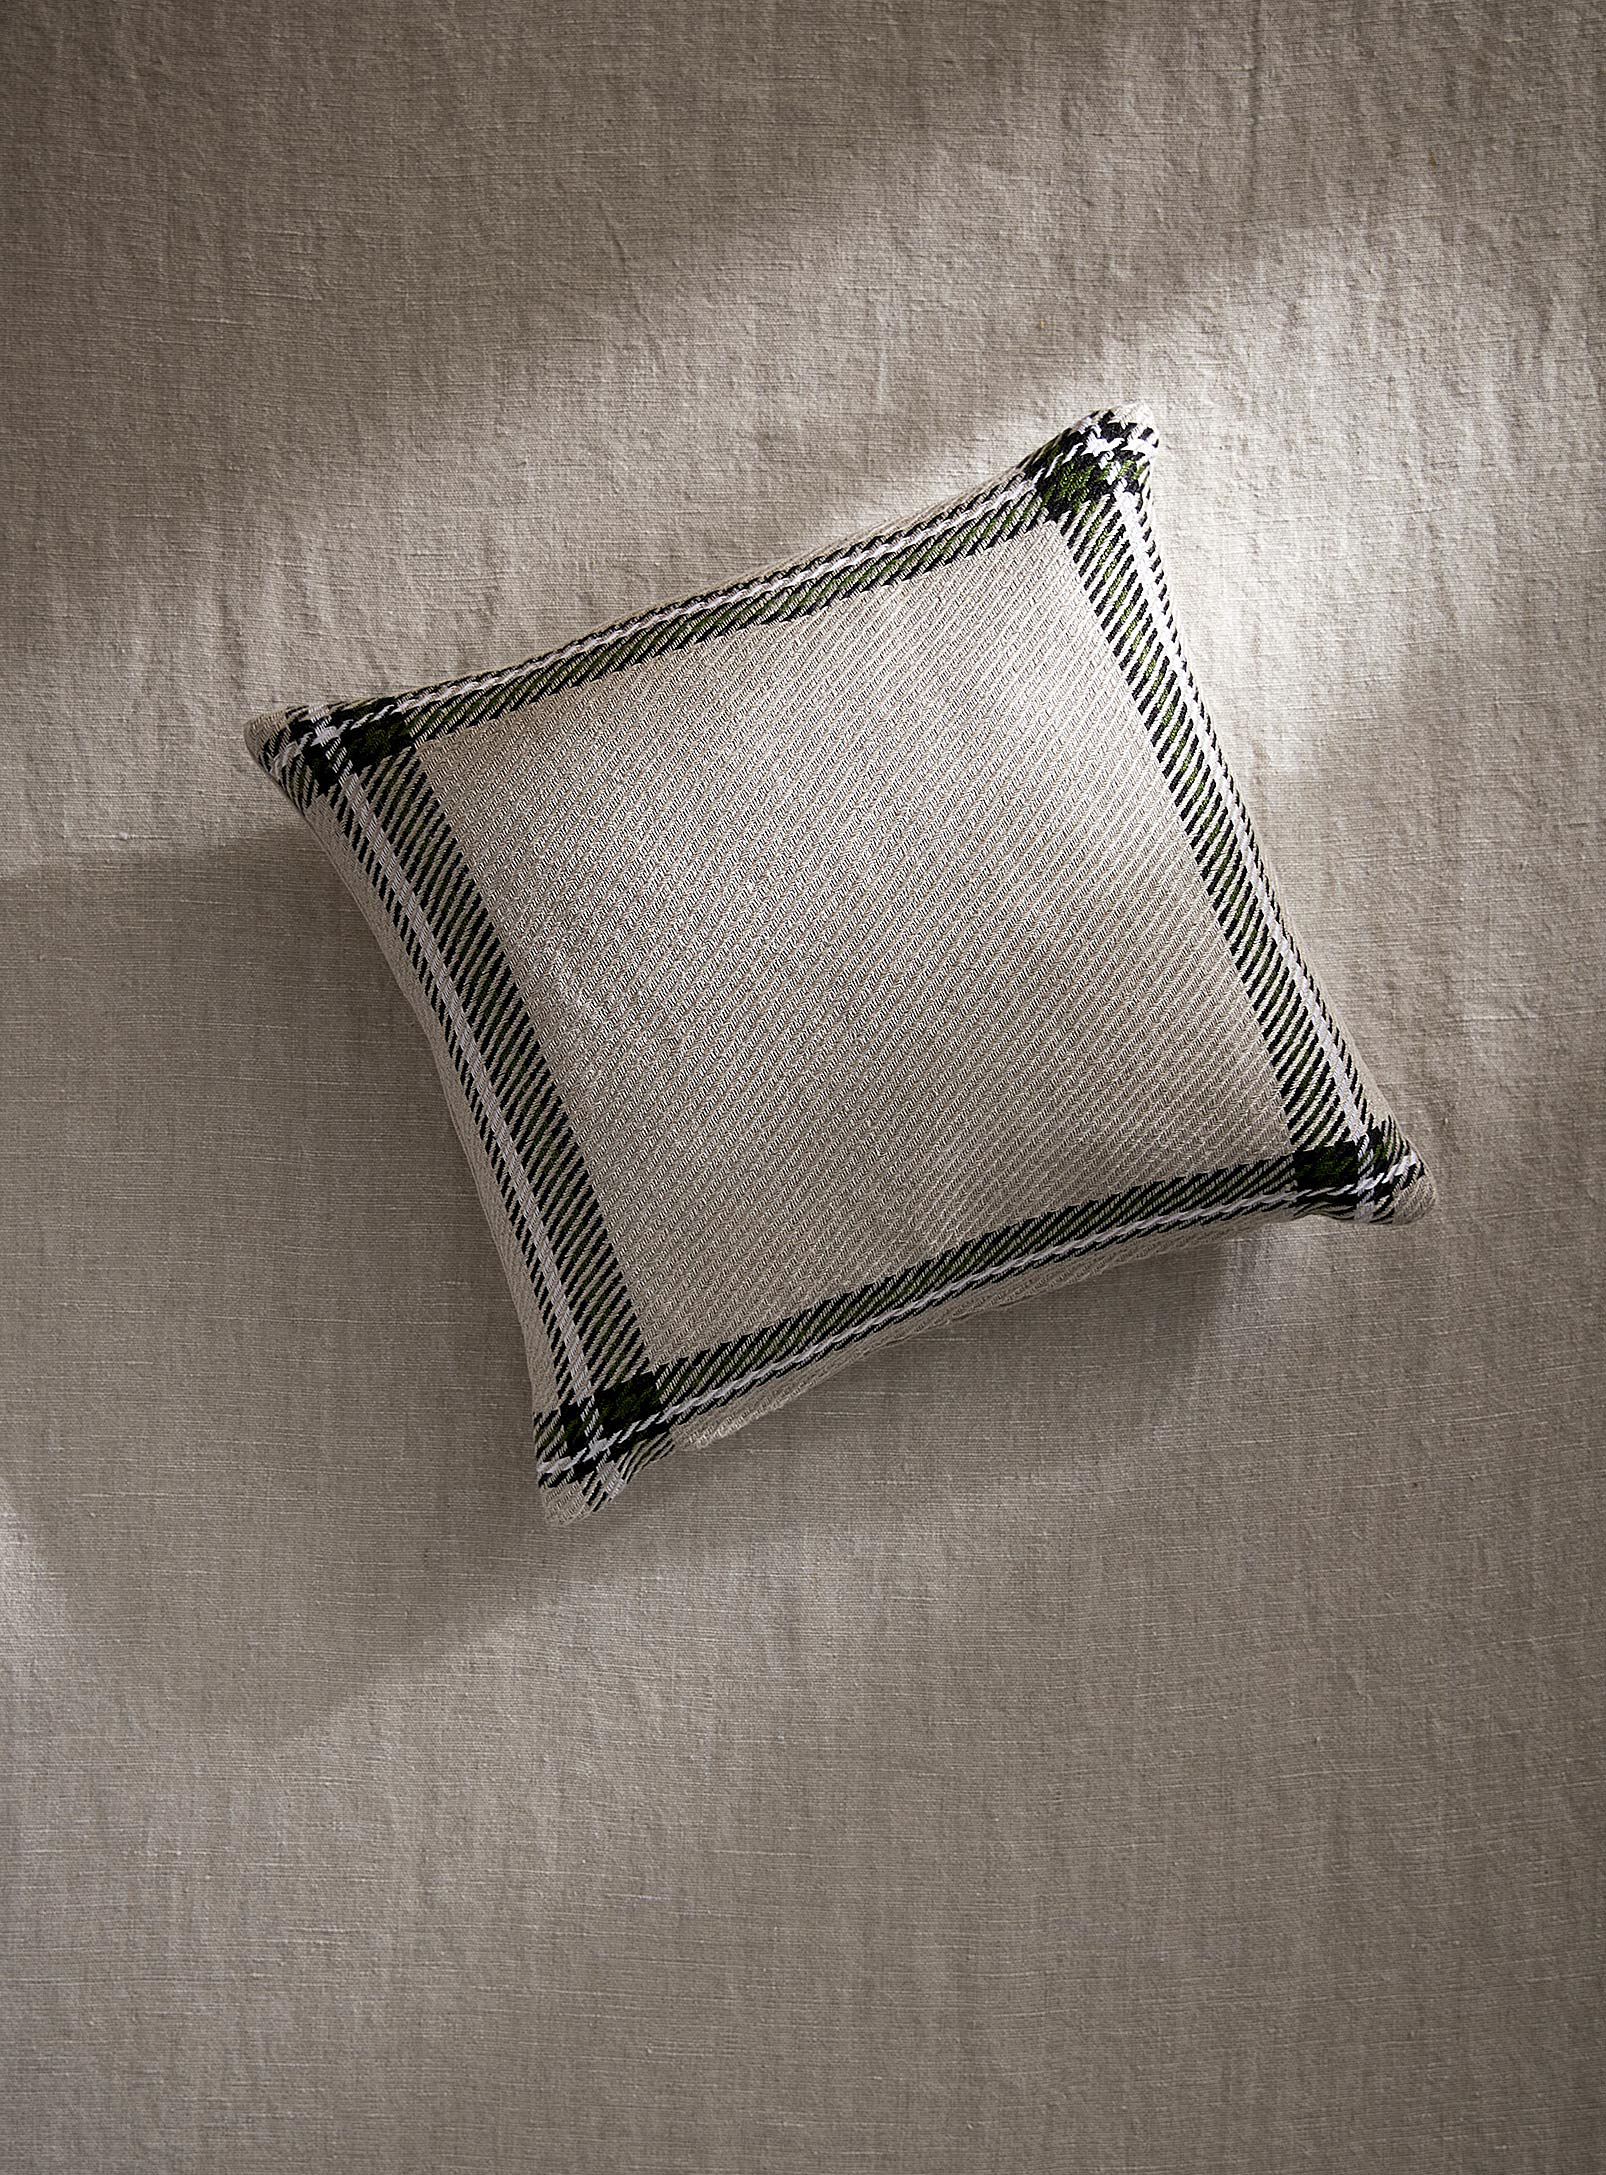 Atelier Monique Ratelle - Minimalist checkers pure linen cushion See available sizes